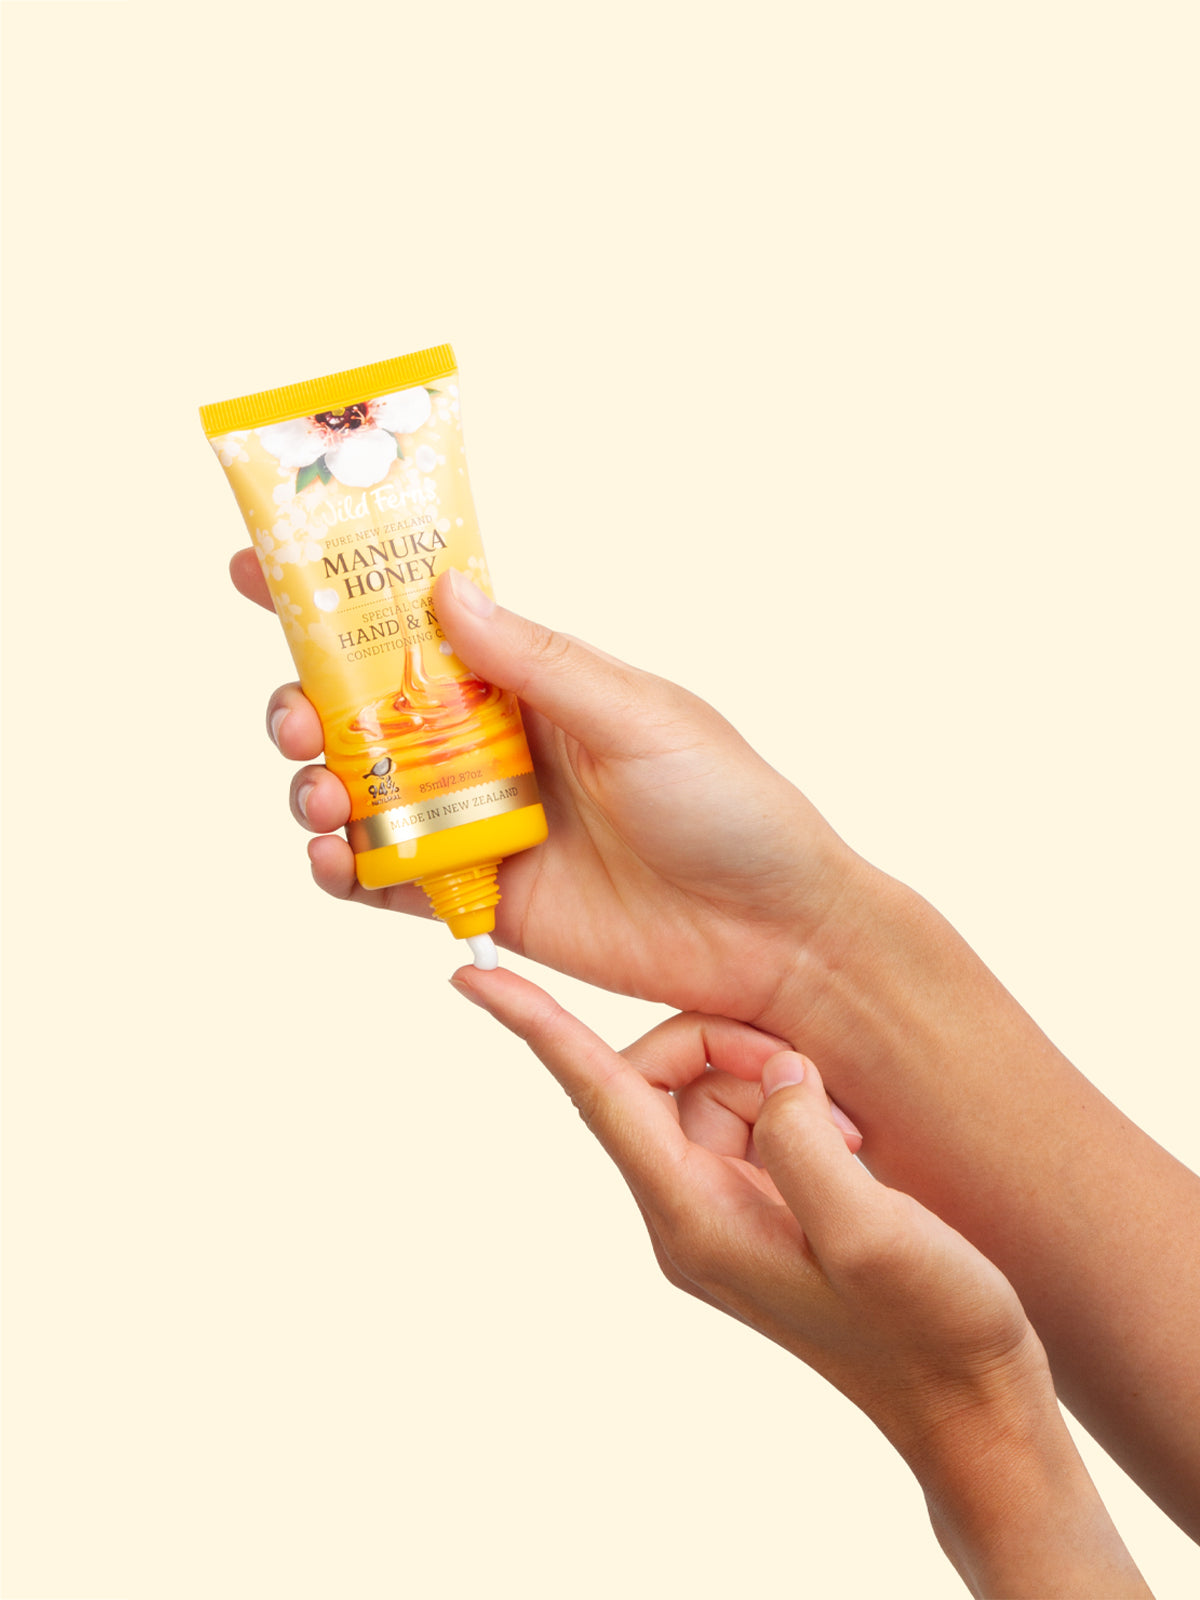 Manuka Honey Special Care Hand & Nail Conditioning Crème, 85ml